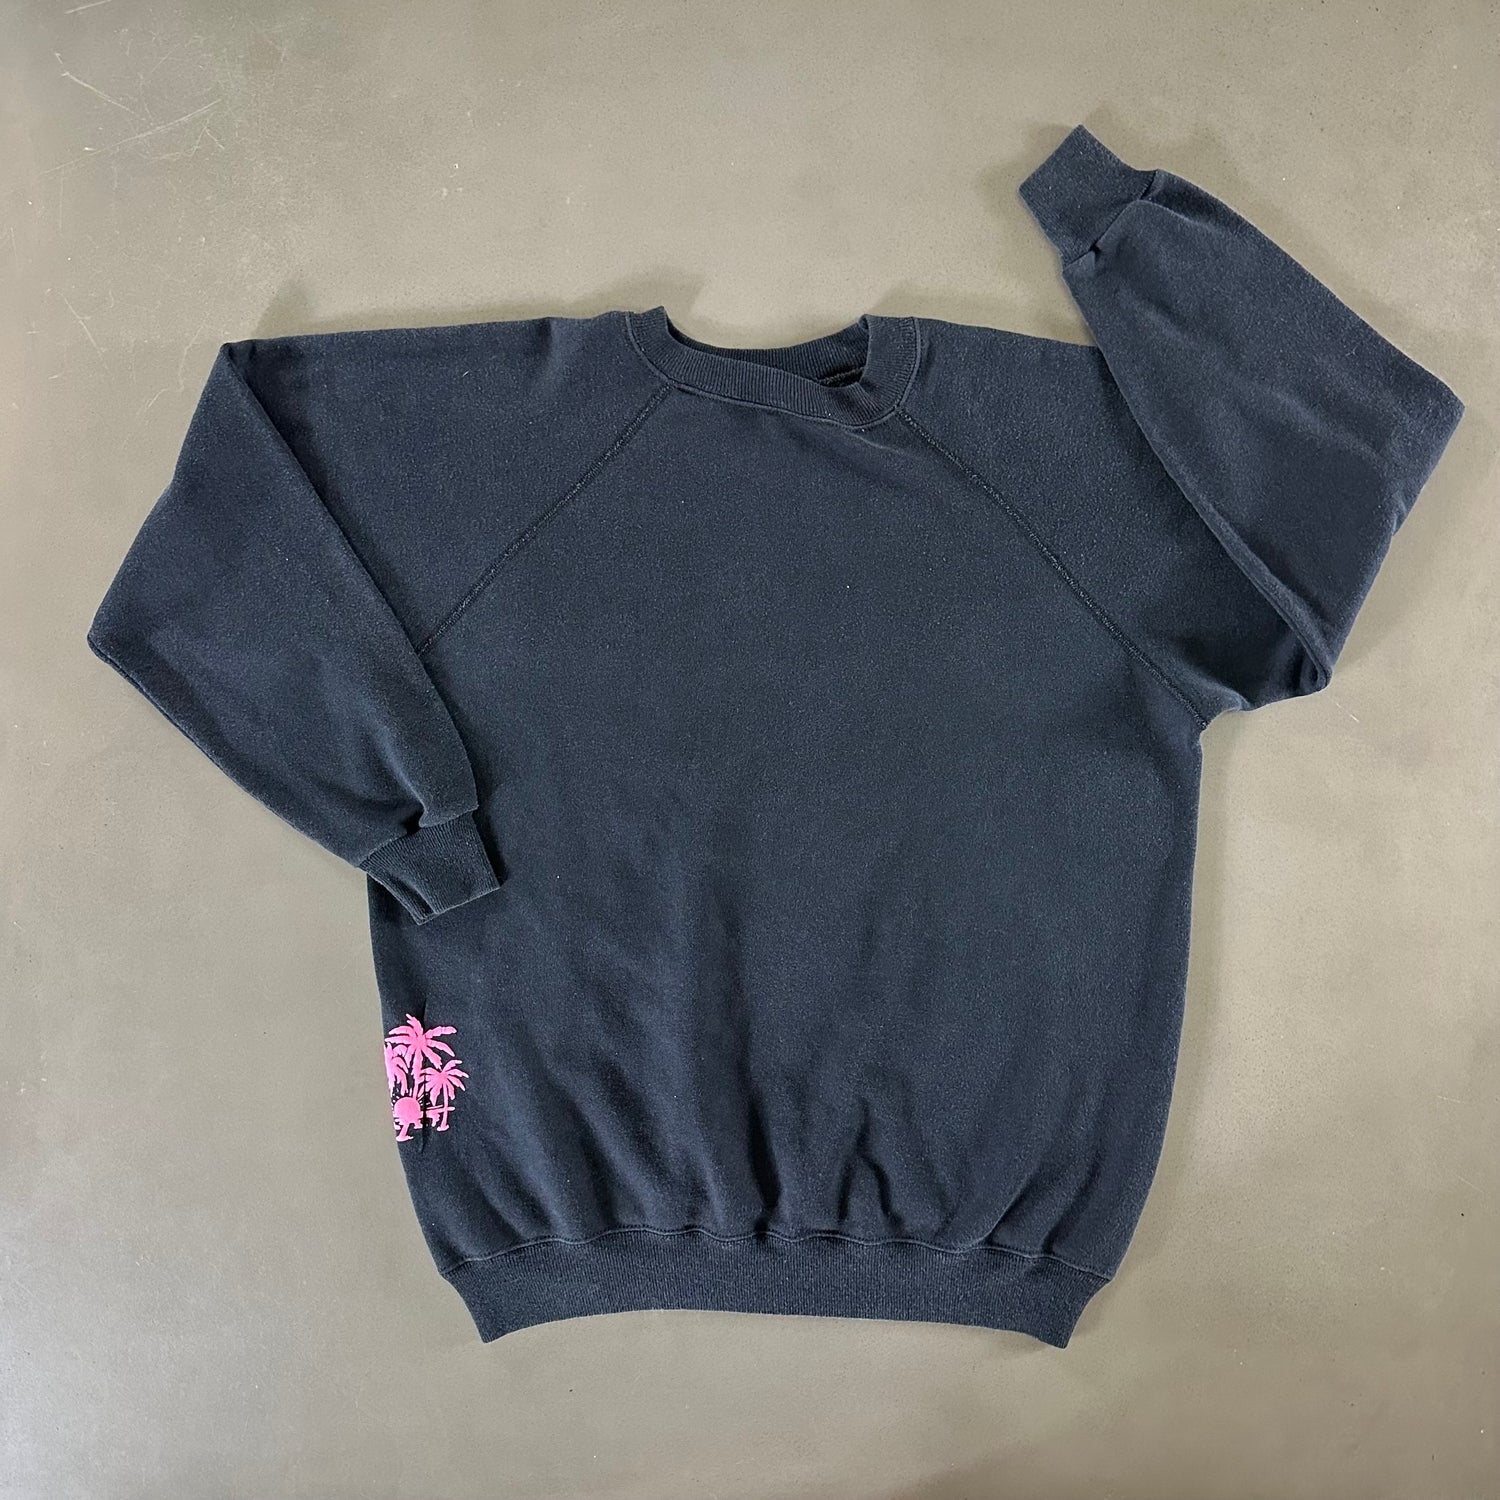 Vintage 1990s Florida Sweatshirt size XL